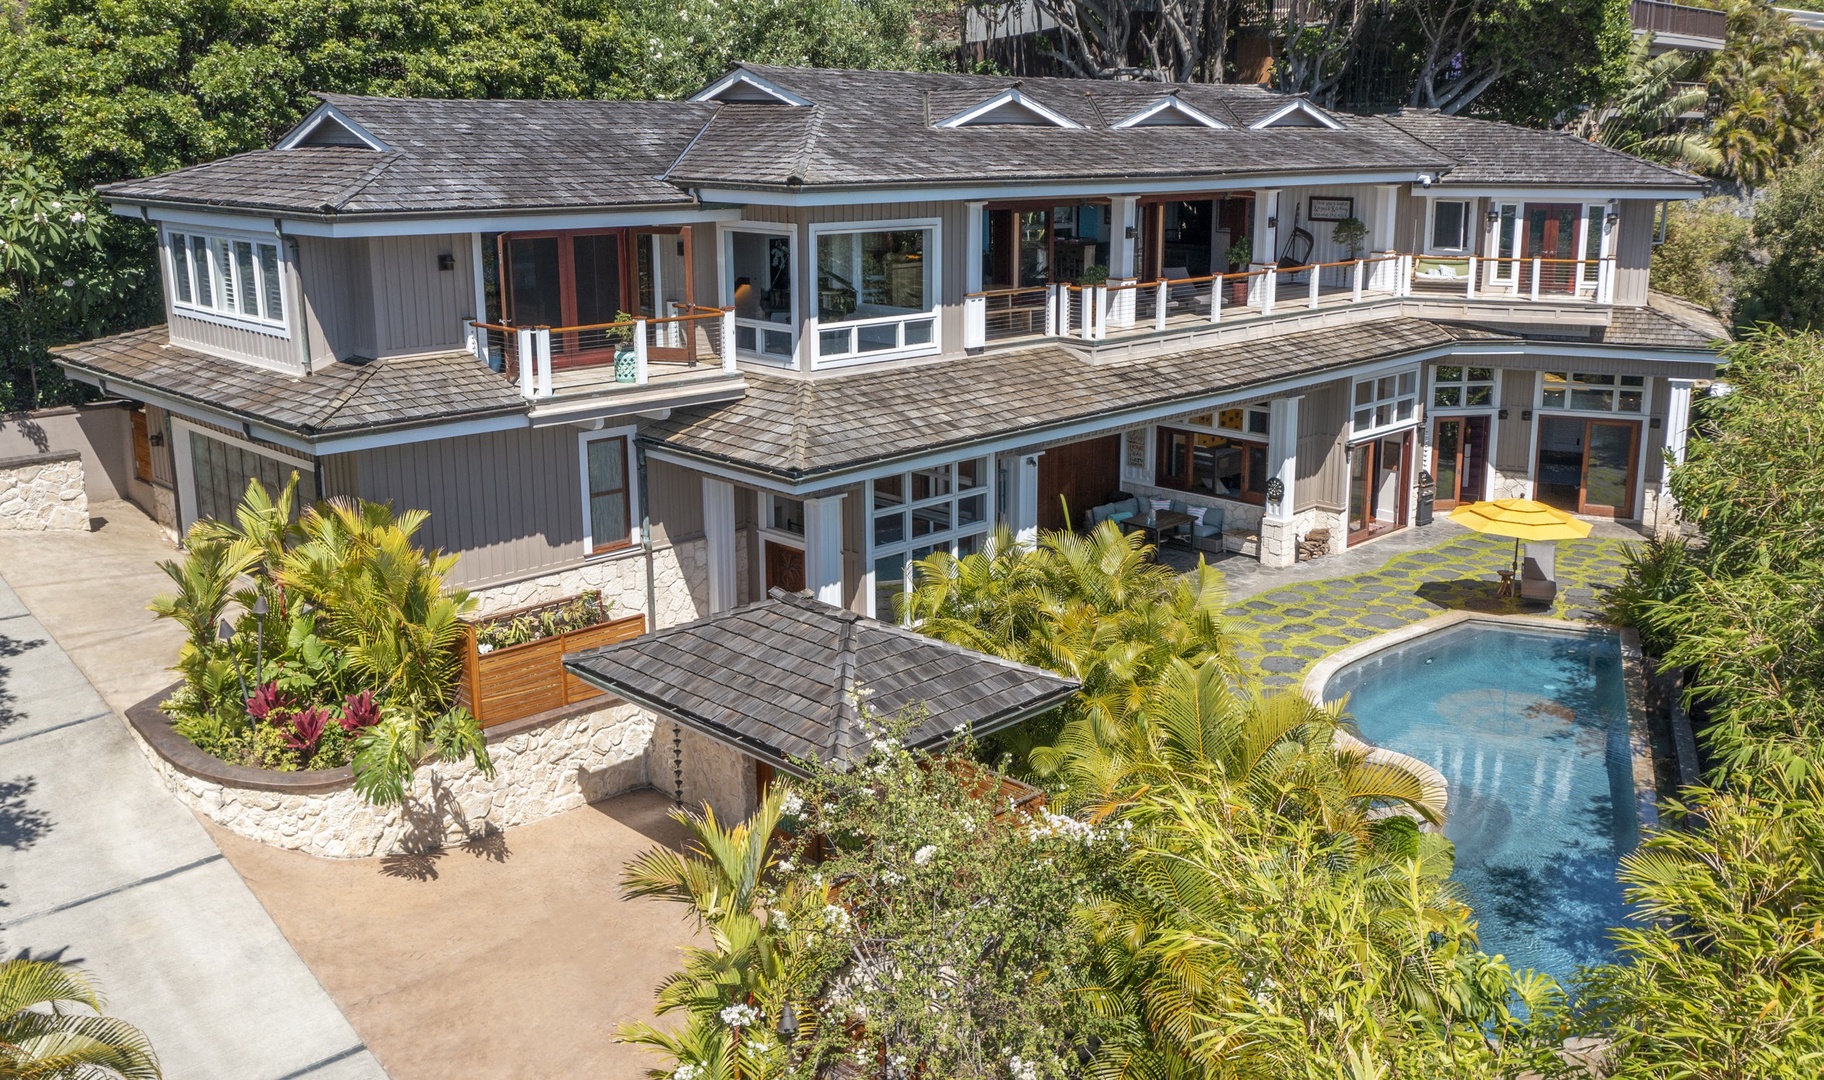 Kailua Vacation Rentals, Lanikai Villa* - Experience coastal luxury right here at Lanikai Villa